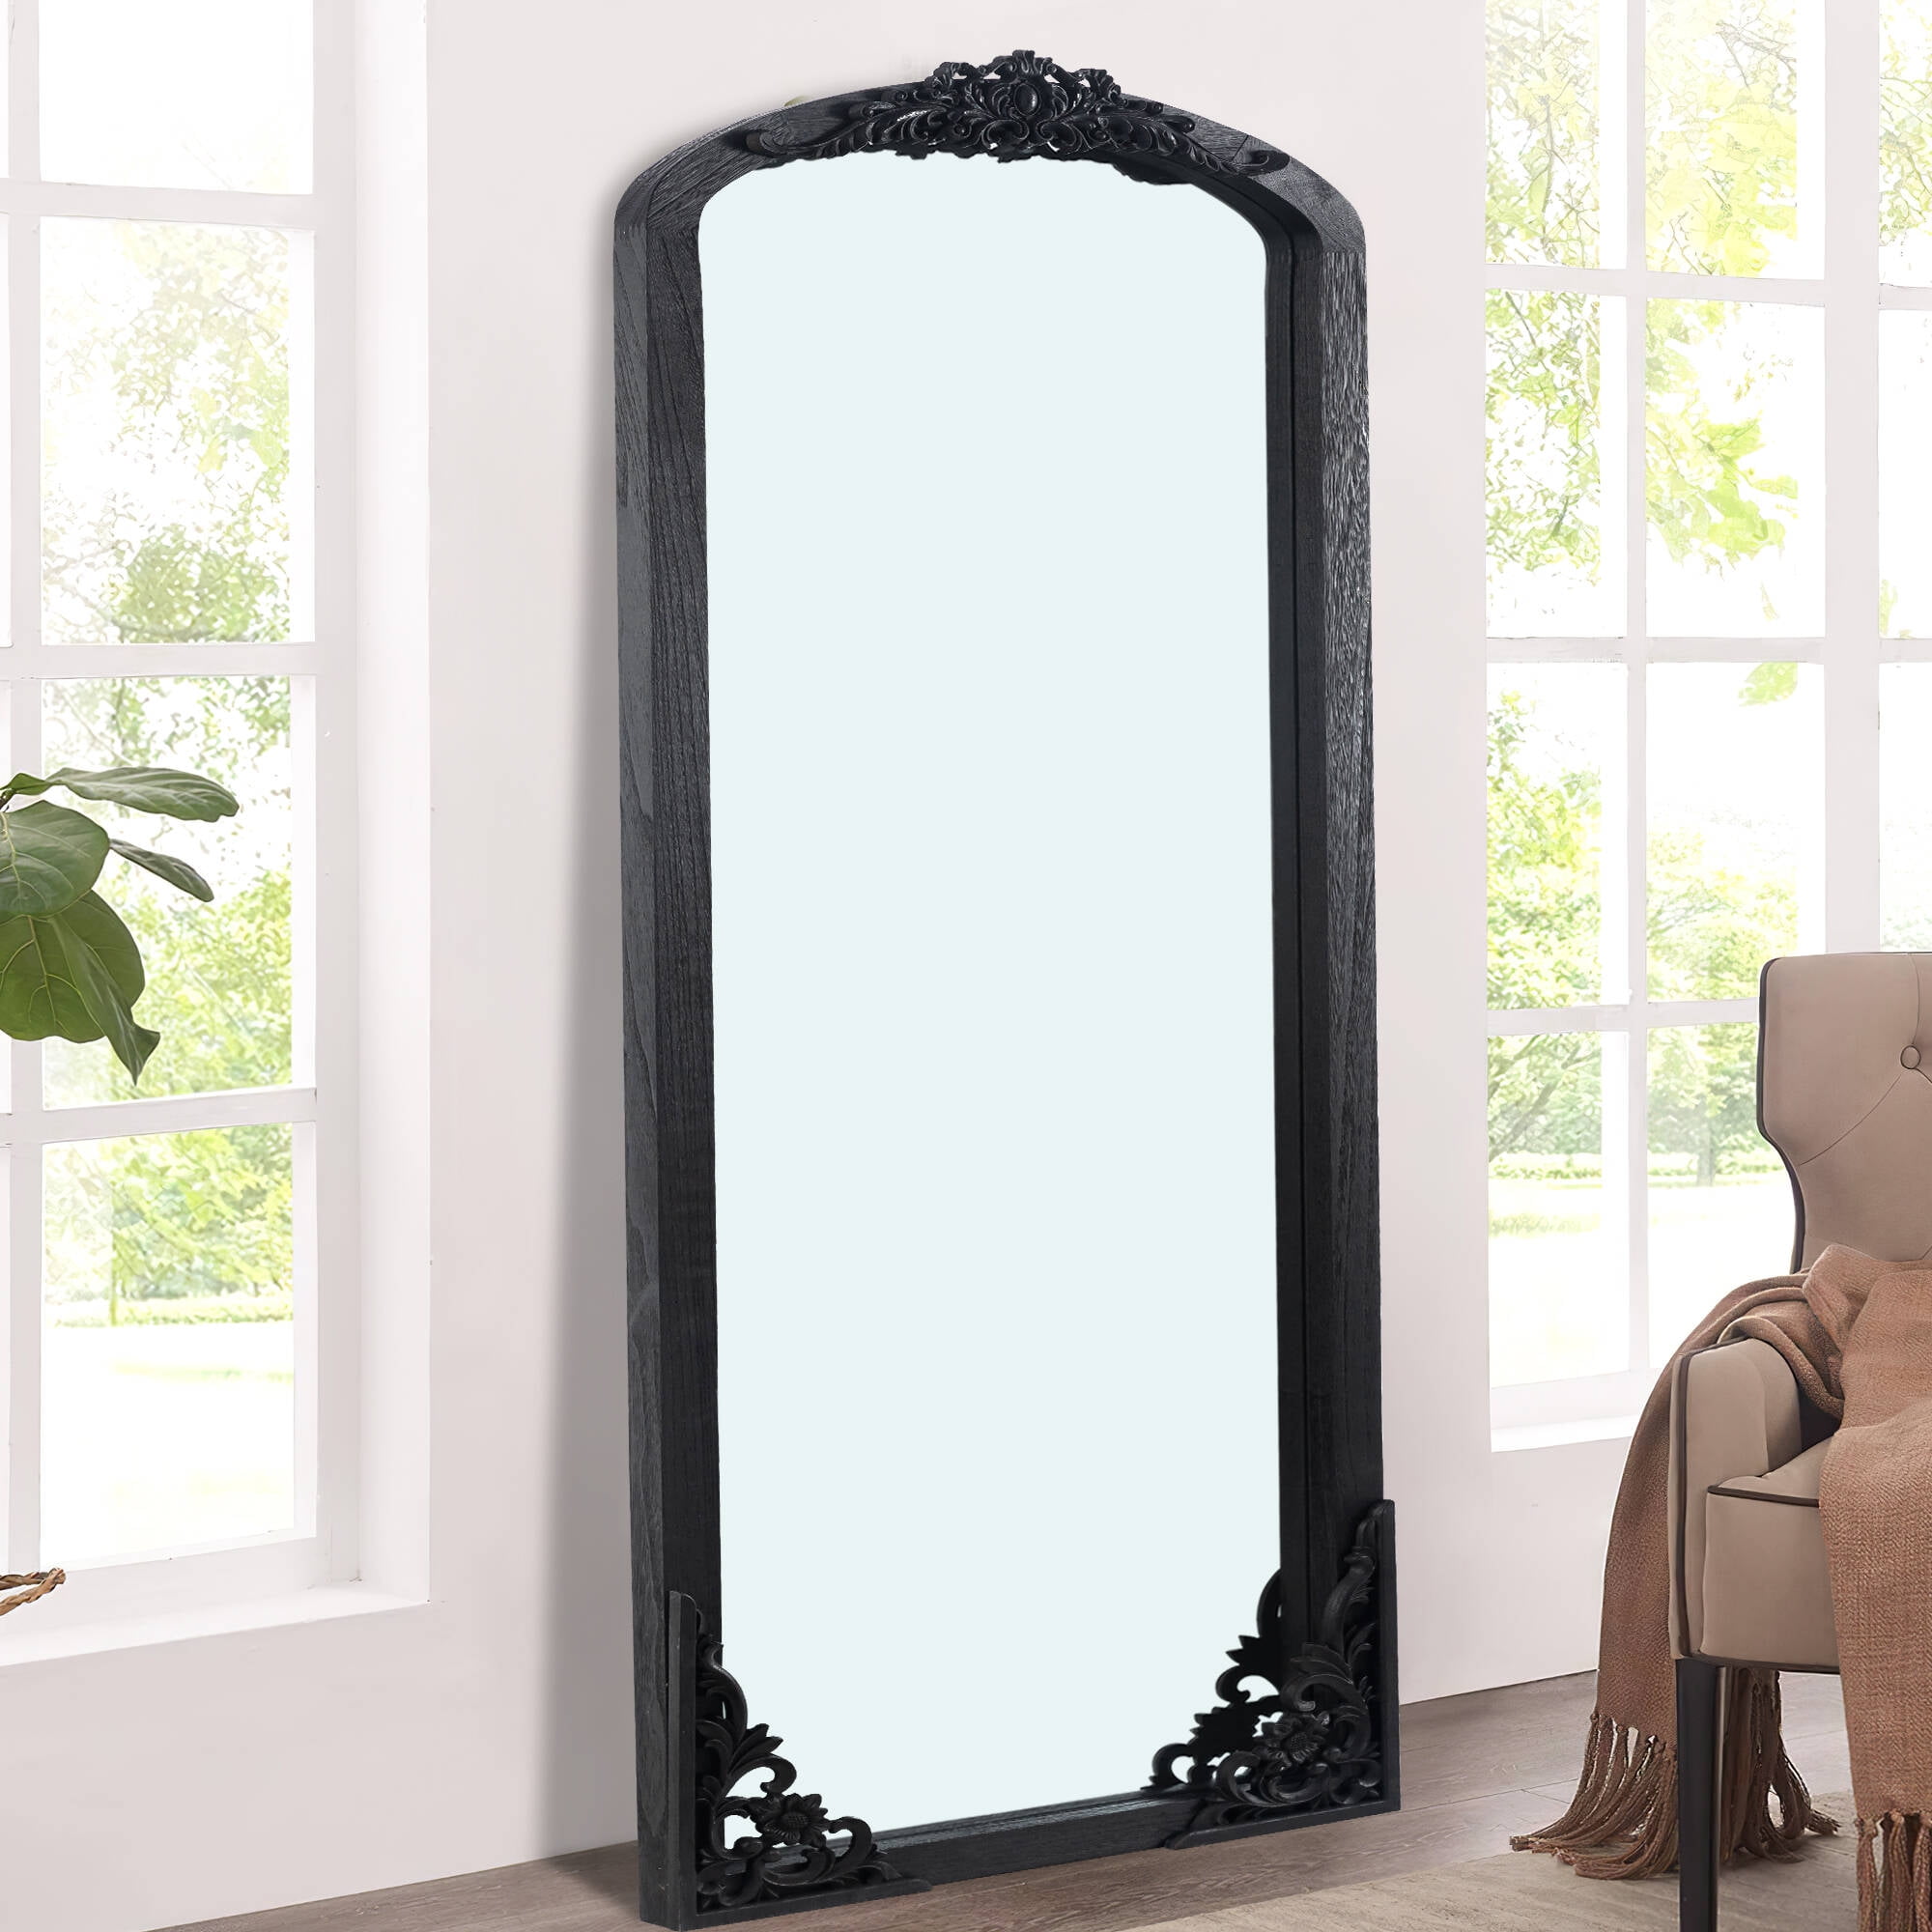 NeuType 71x30 Arch Full-Length Vintage Mirror, Black - Walmart.com